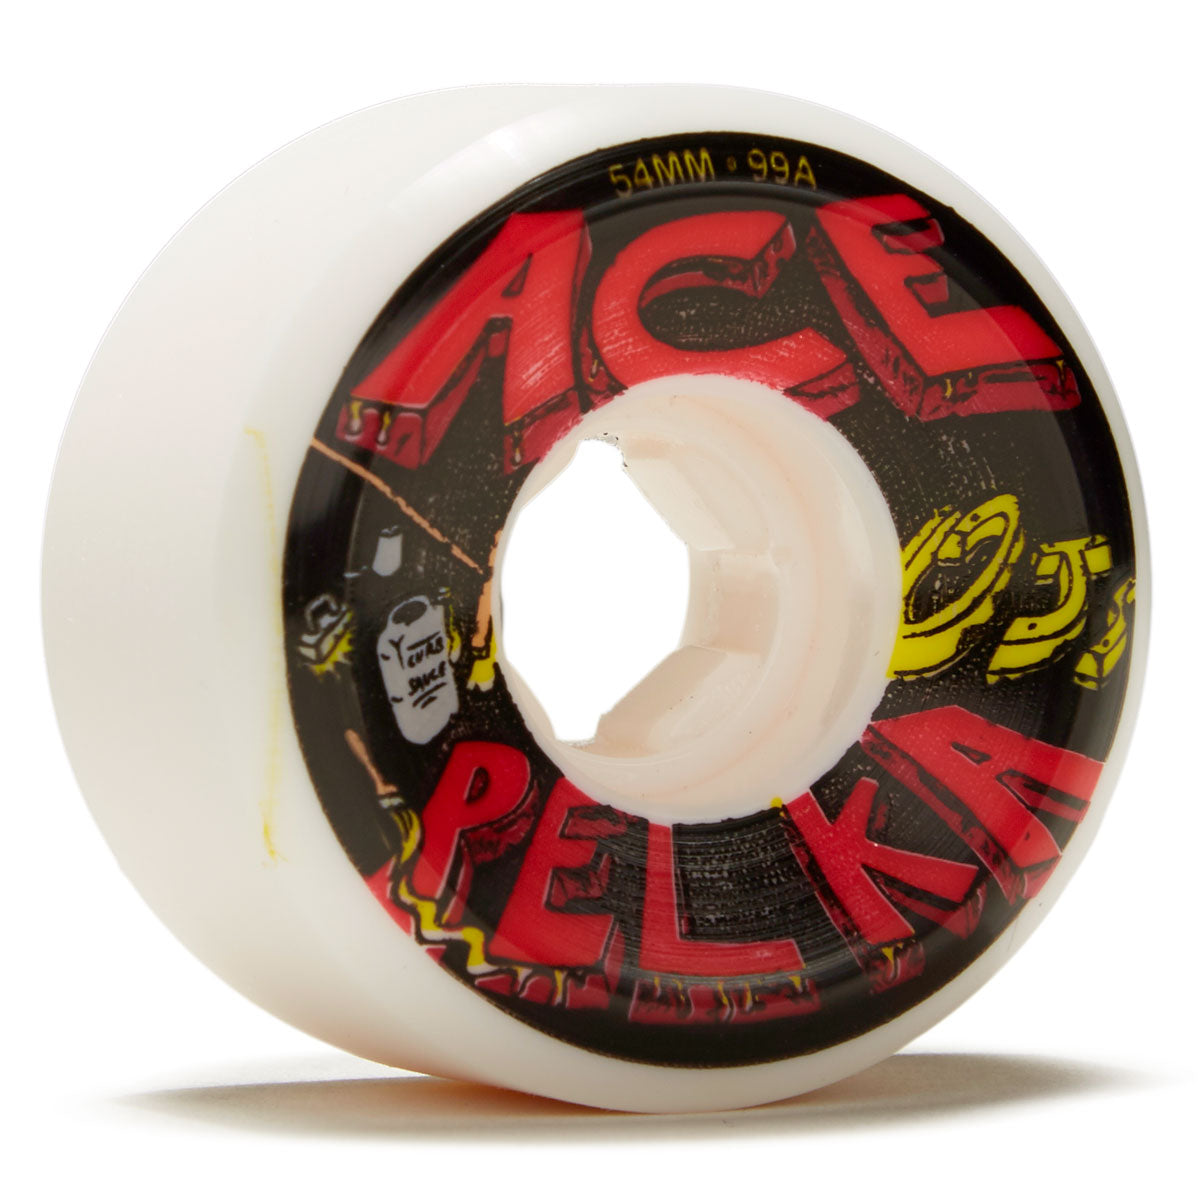 OJ Ace Pelka Elite Hardline 99a Skateboard Wheels - White - 54mm image 1